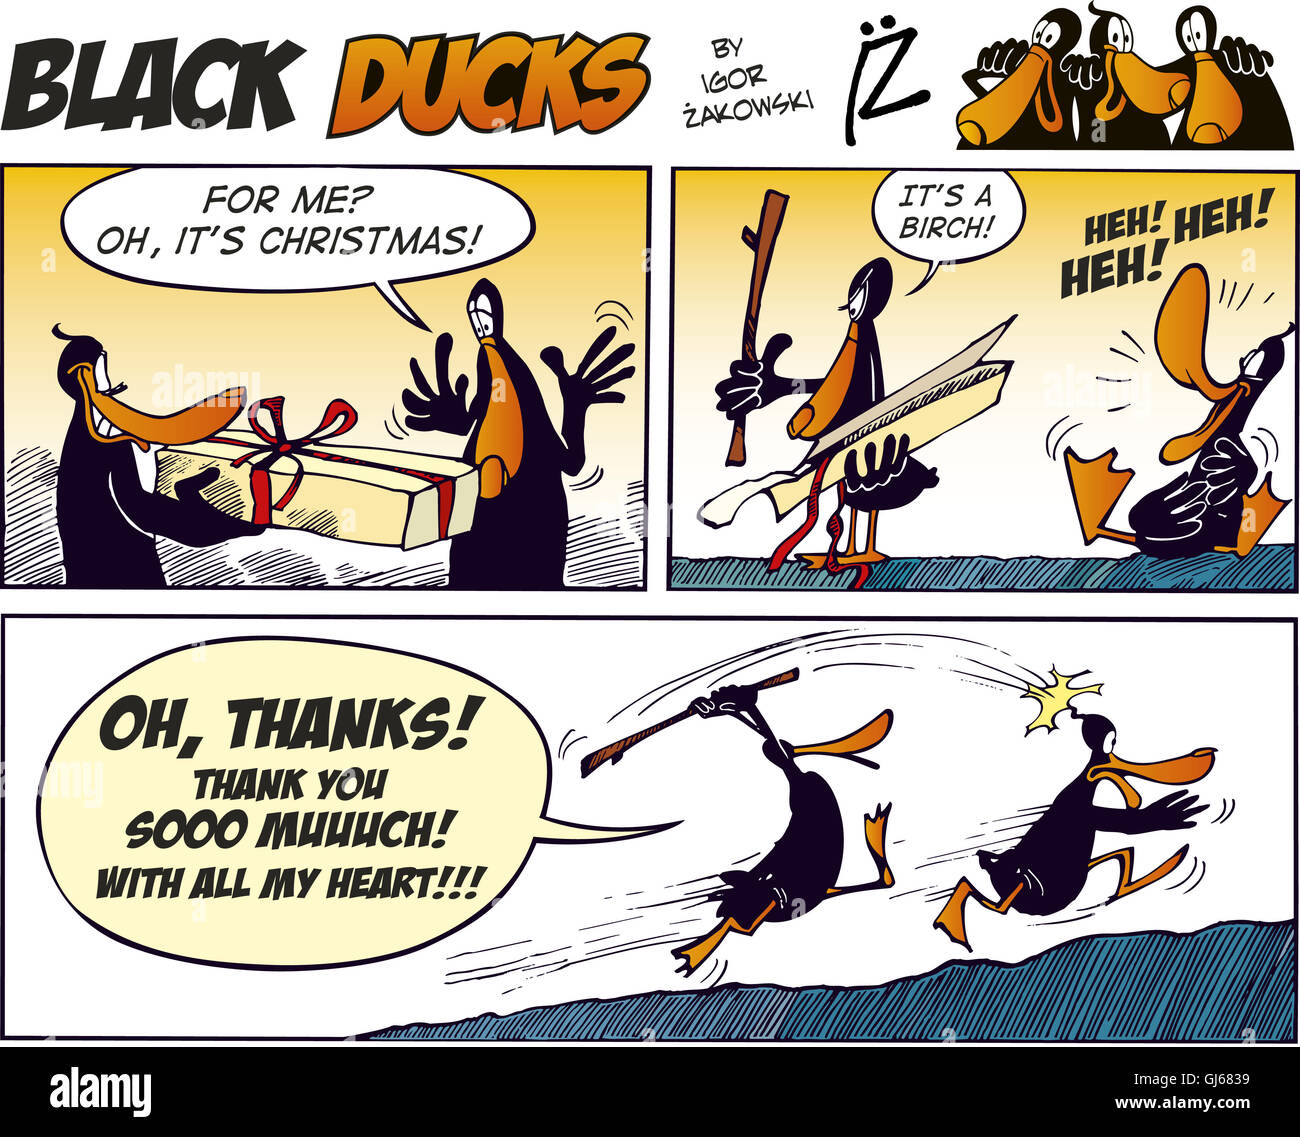 Black Ducks Comics episode 27 Stock Photo